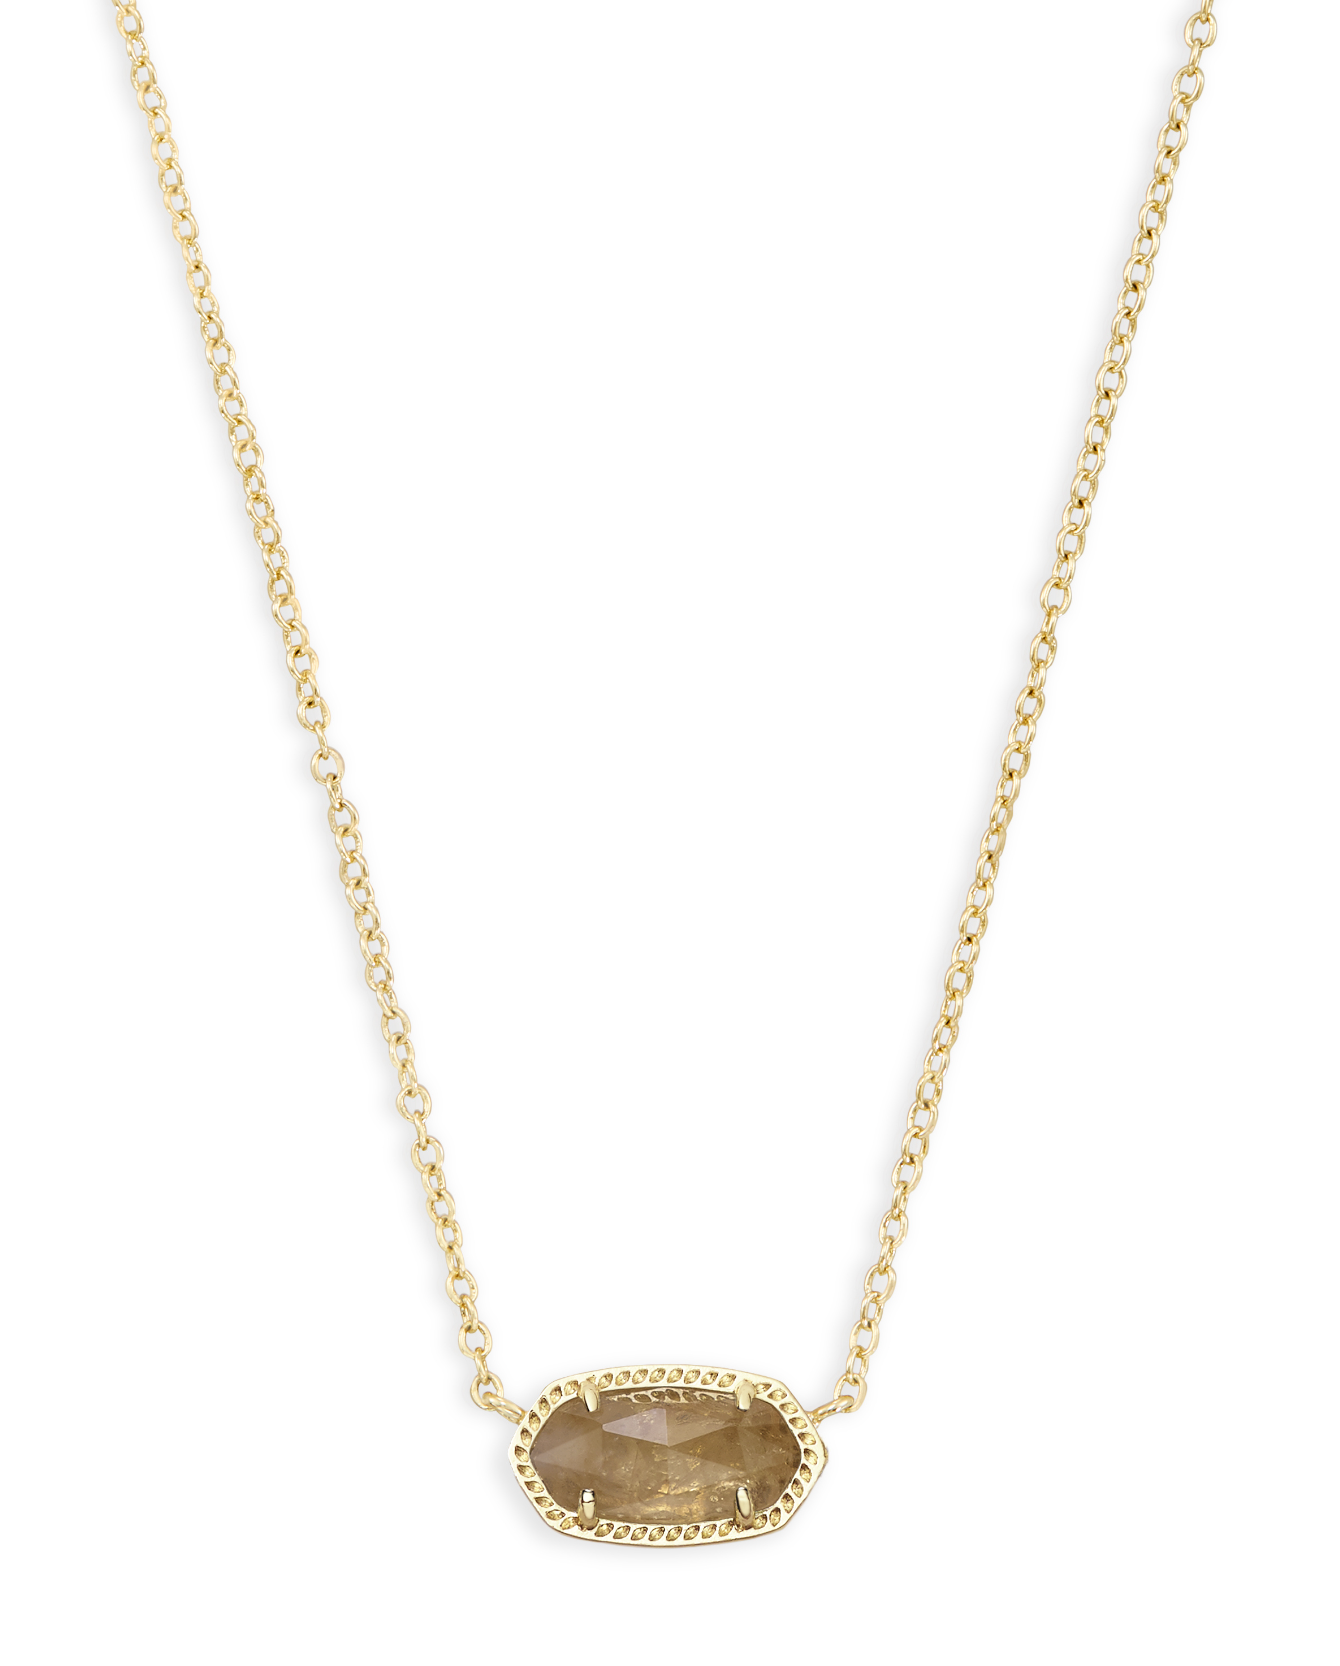 Elisa Gold Pendant Necklace in Orange Citrine Quartz | KENDRA SCOTT - The Street Boutique 